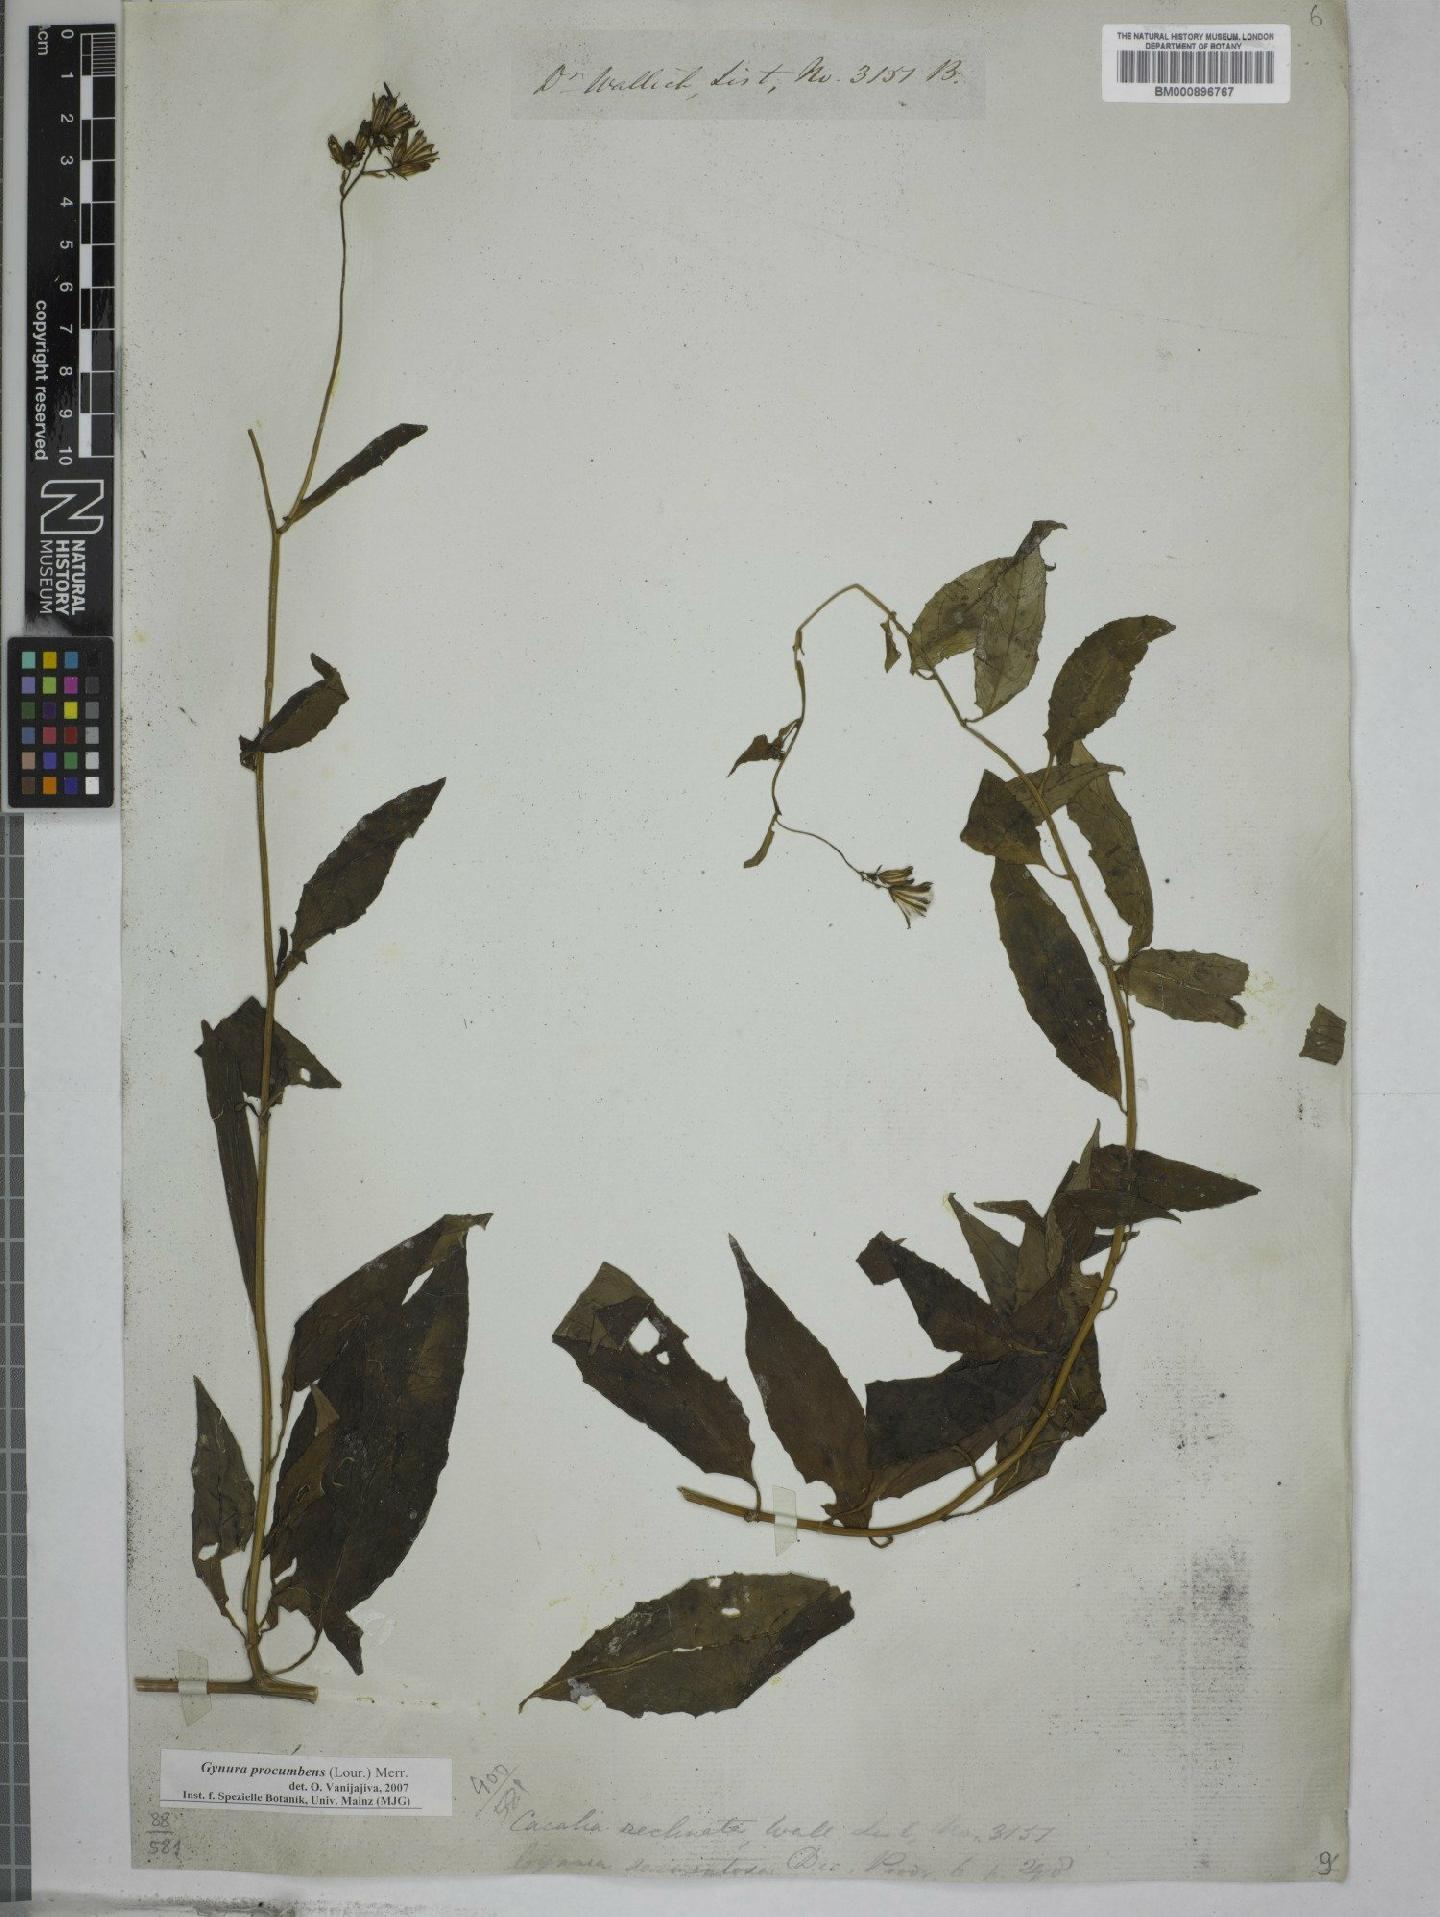 To NHMUK collection (Gynura procumbens (Lour.) Merr.; NHMUK:ecatalogue:4667366)